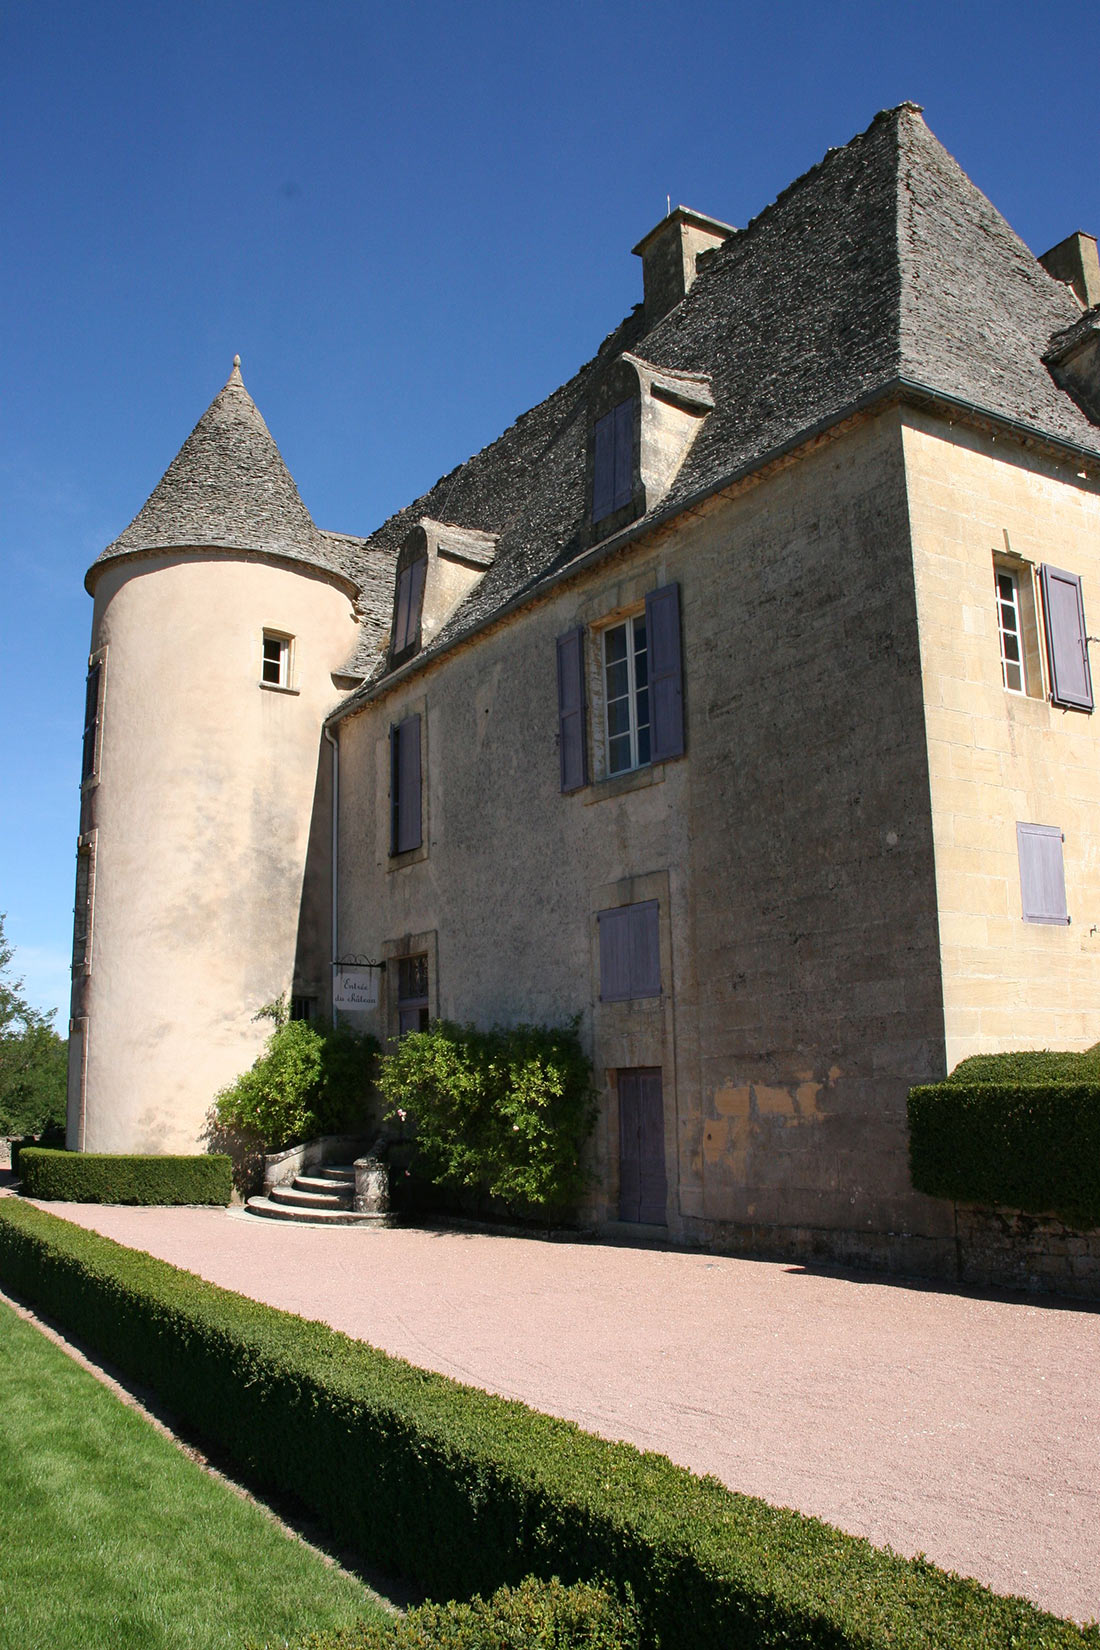 Marquessac castle